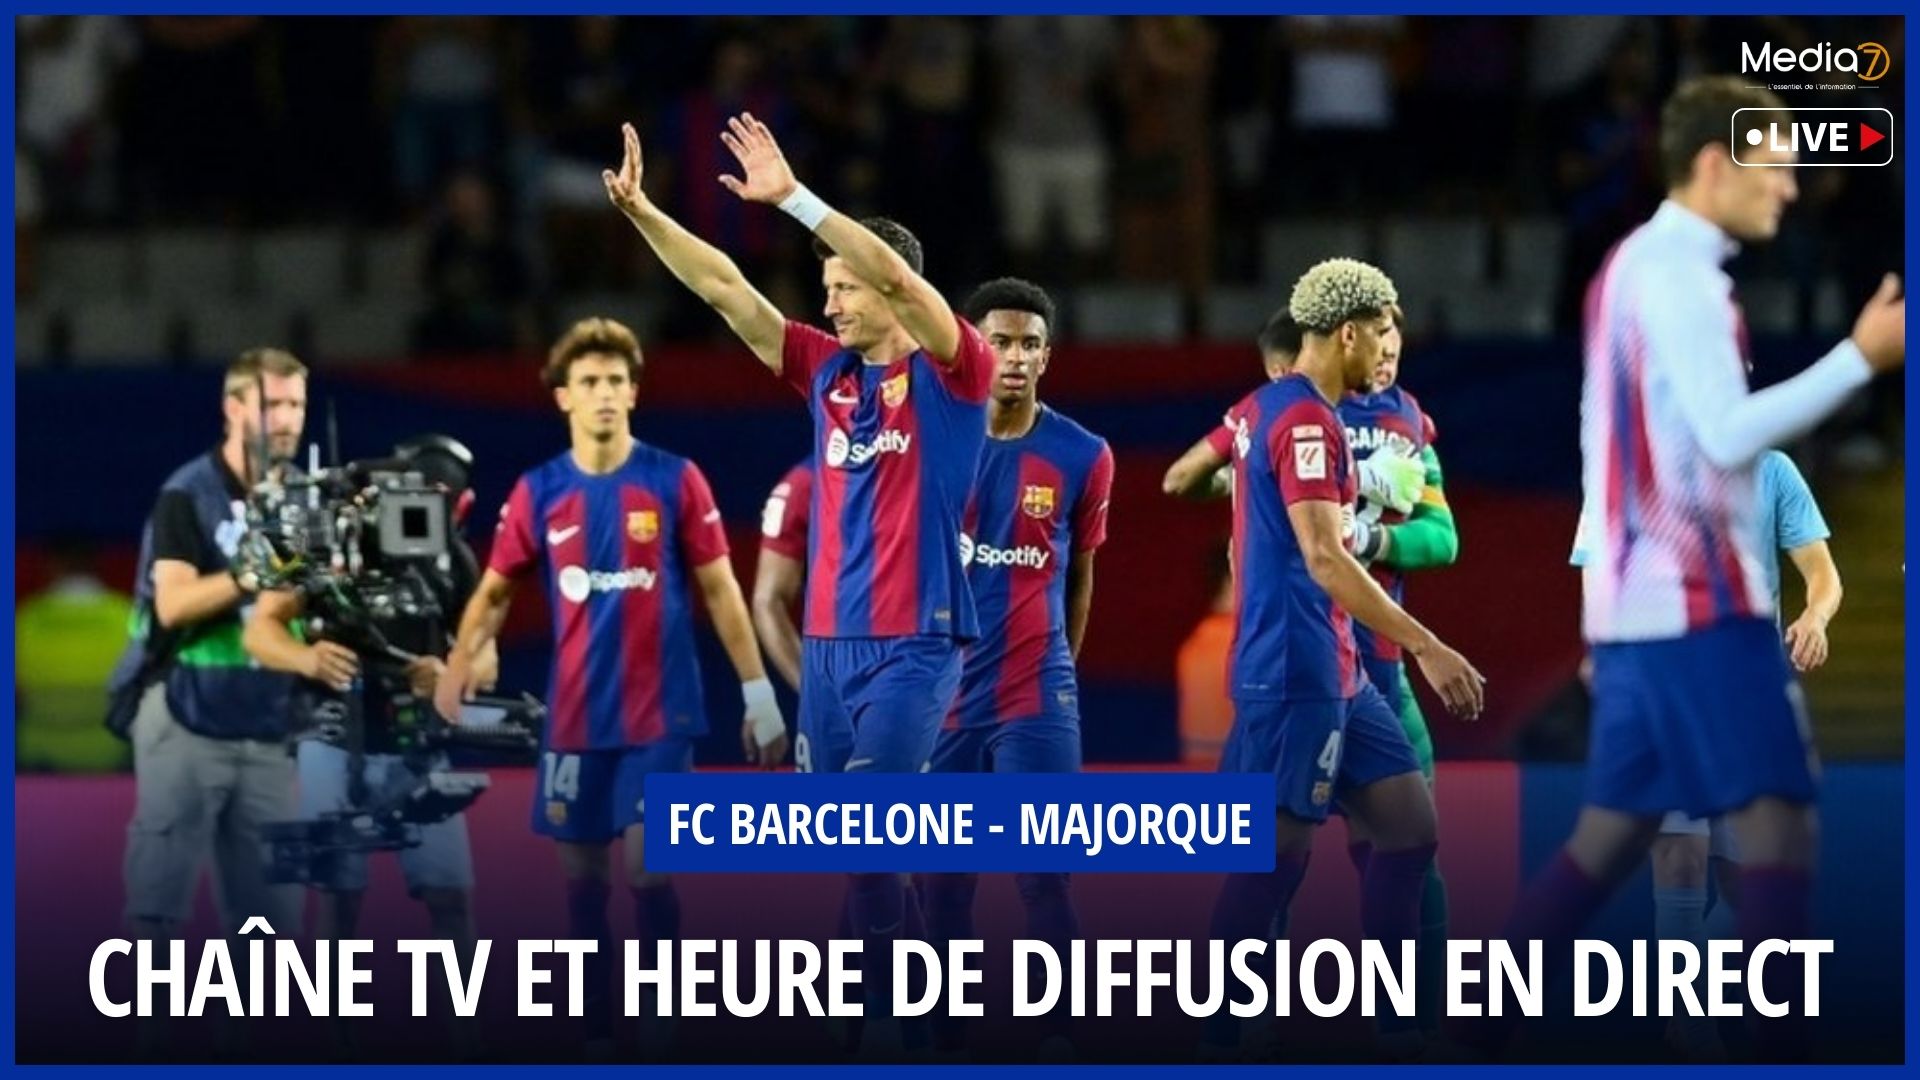 FC Barcelona - Mallorca match live: TV channel and broadcast time - Media7